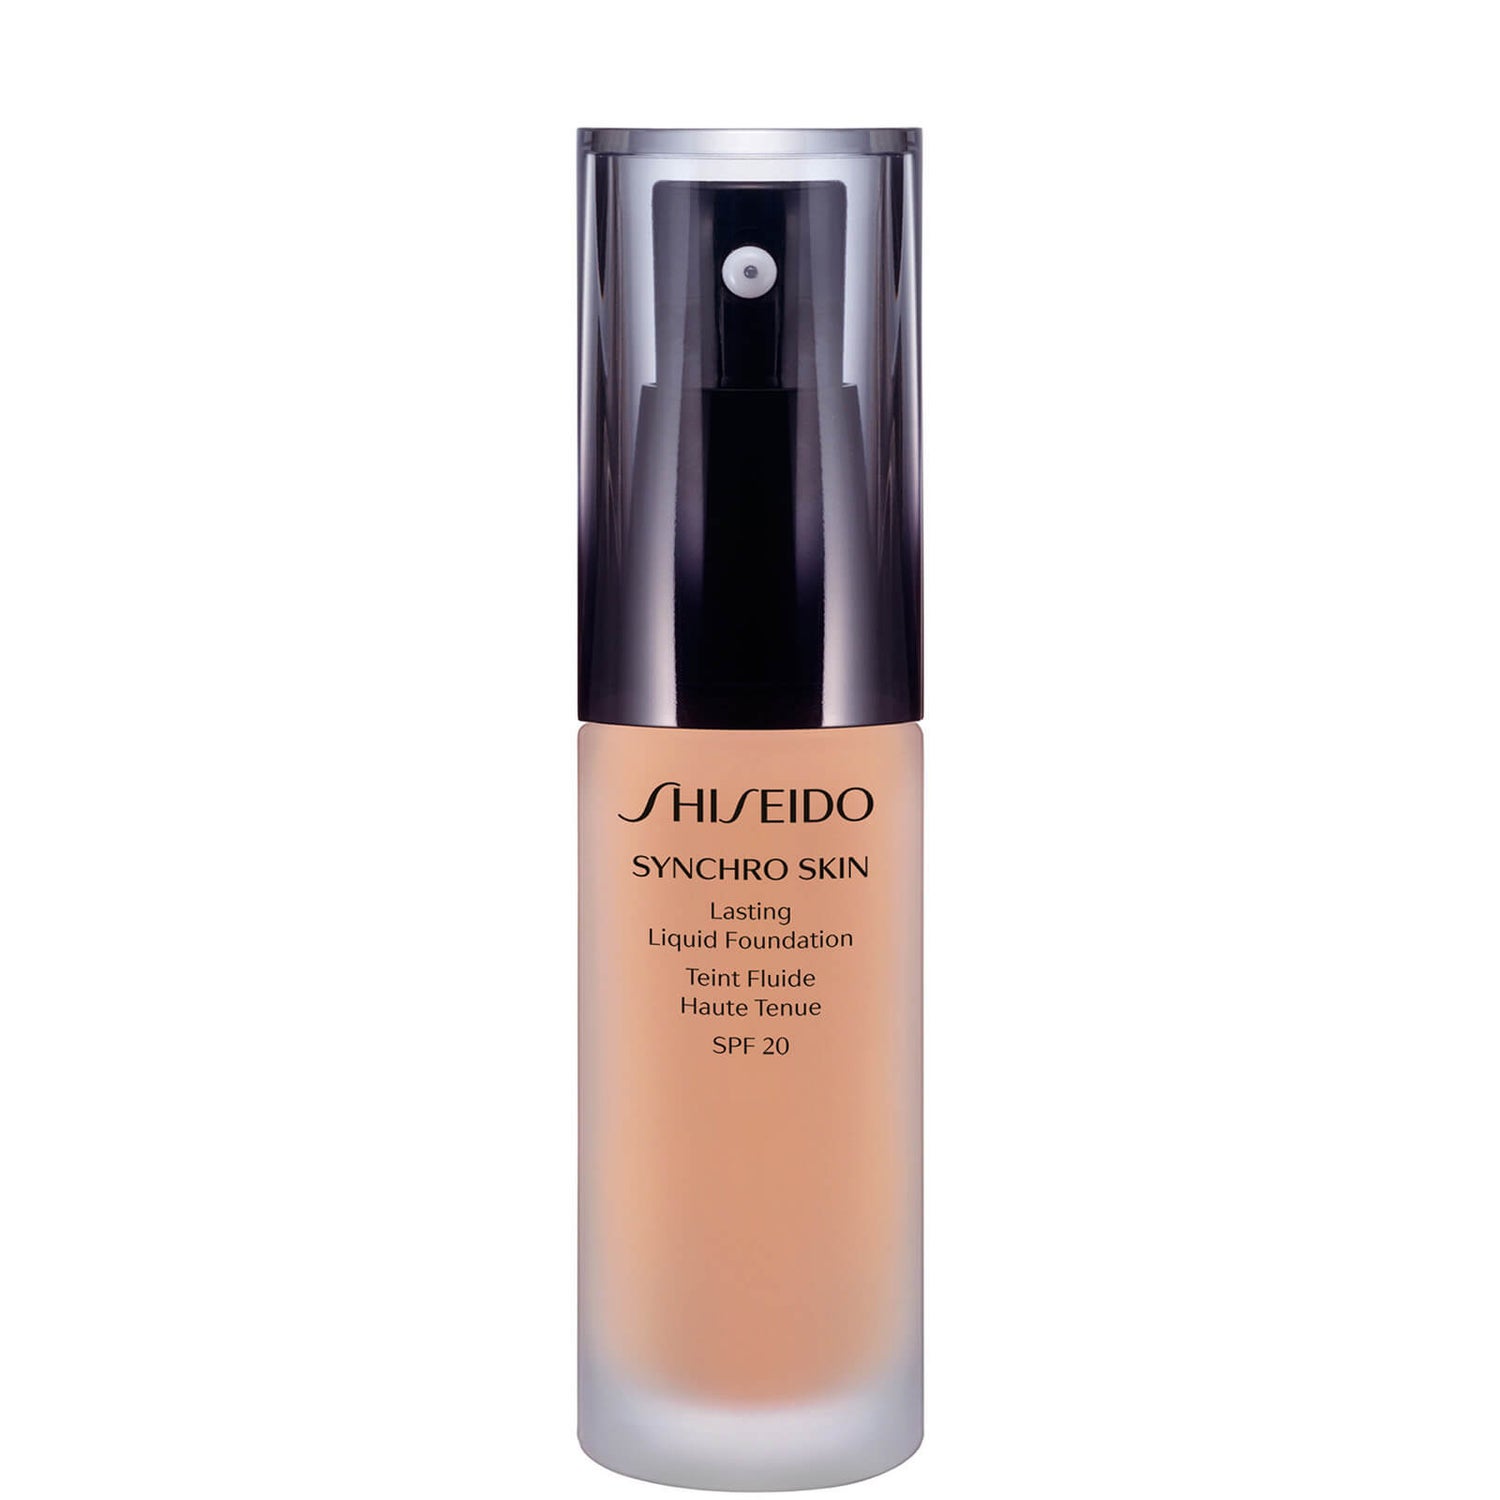 Base Líquida Synchro Skin Lasting com FPS 20 da Shiseido (30 ml) (Vários tons)